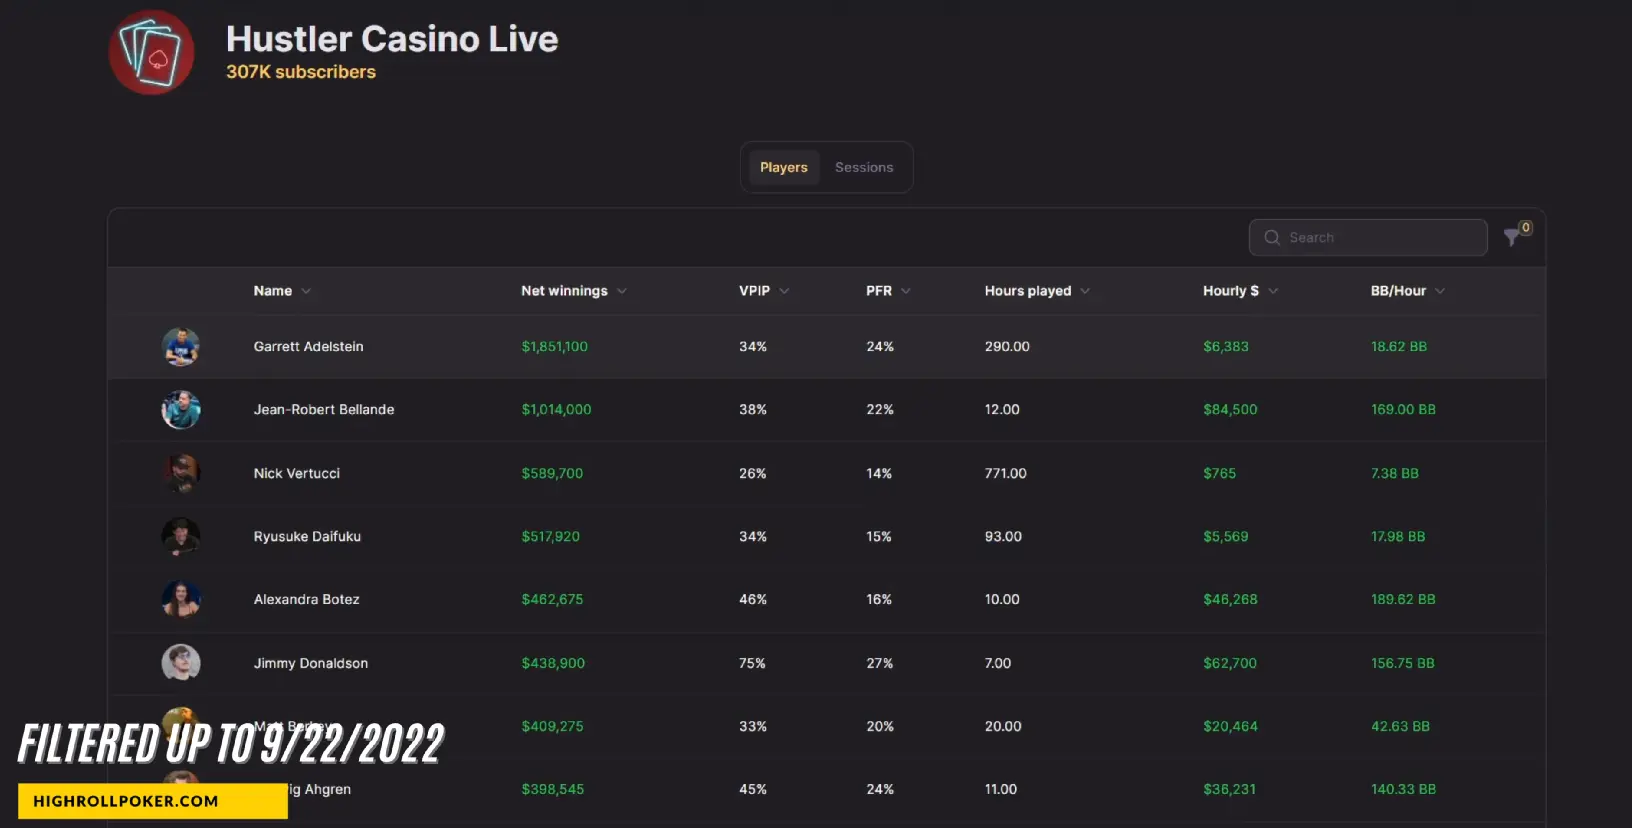 Garrett Adelstein's Hustler Casino Live Ranking Prior to October 22, 2022